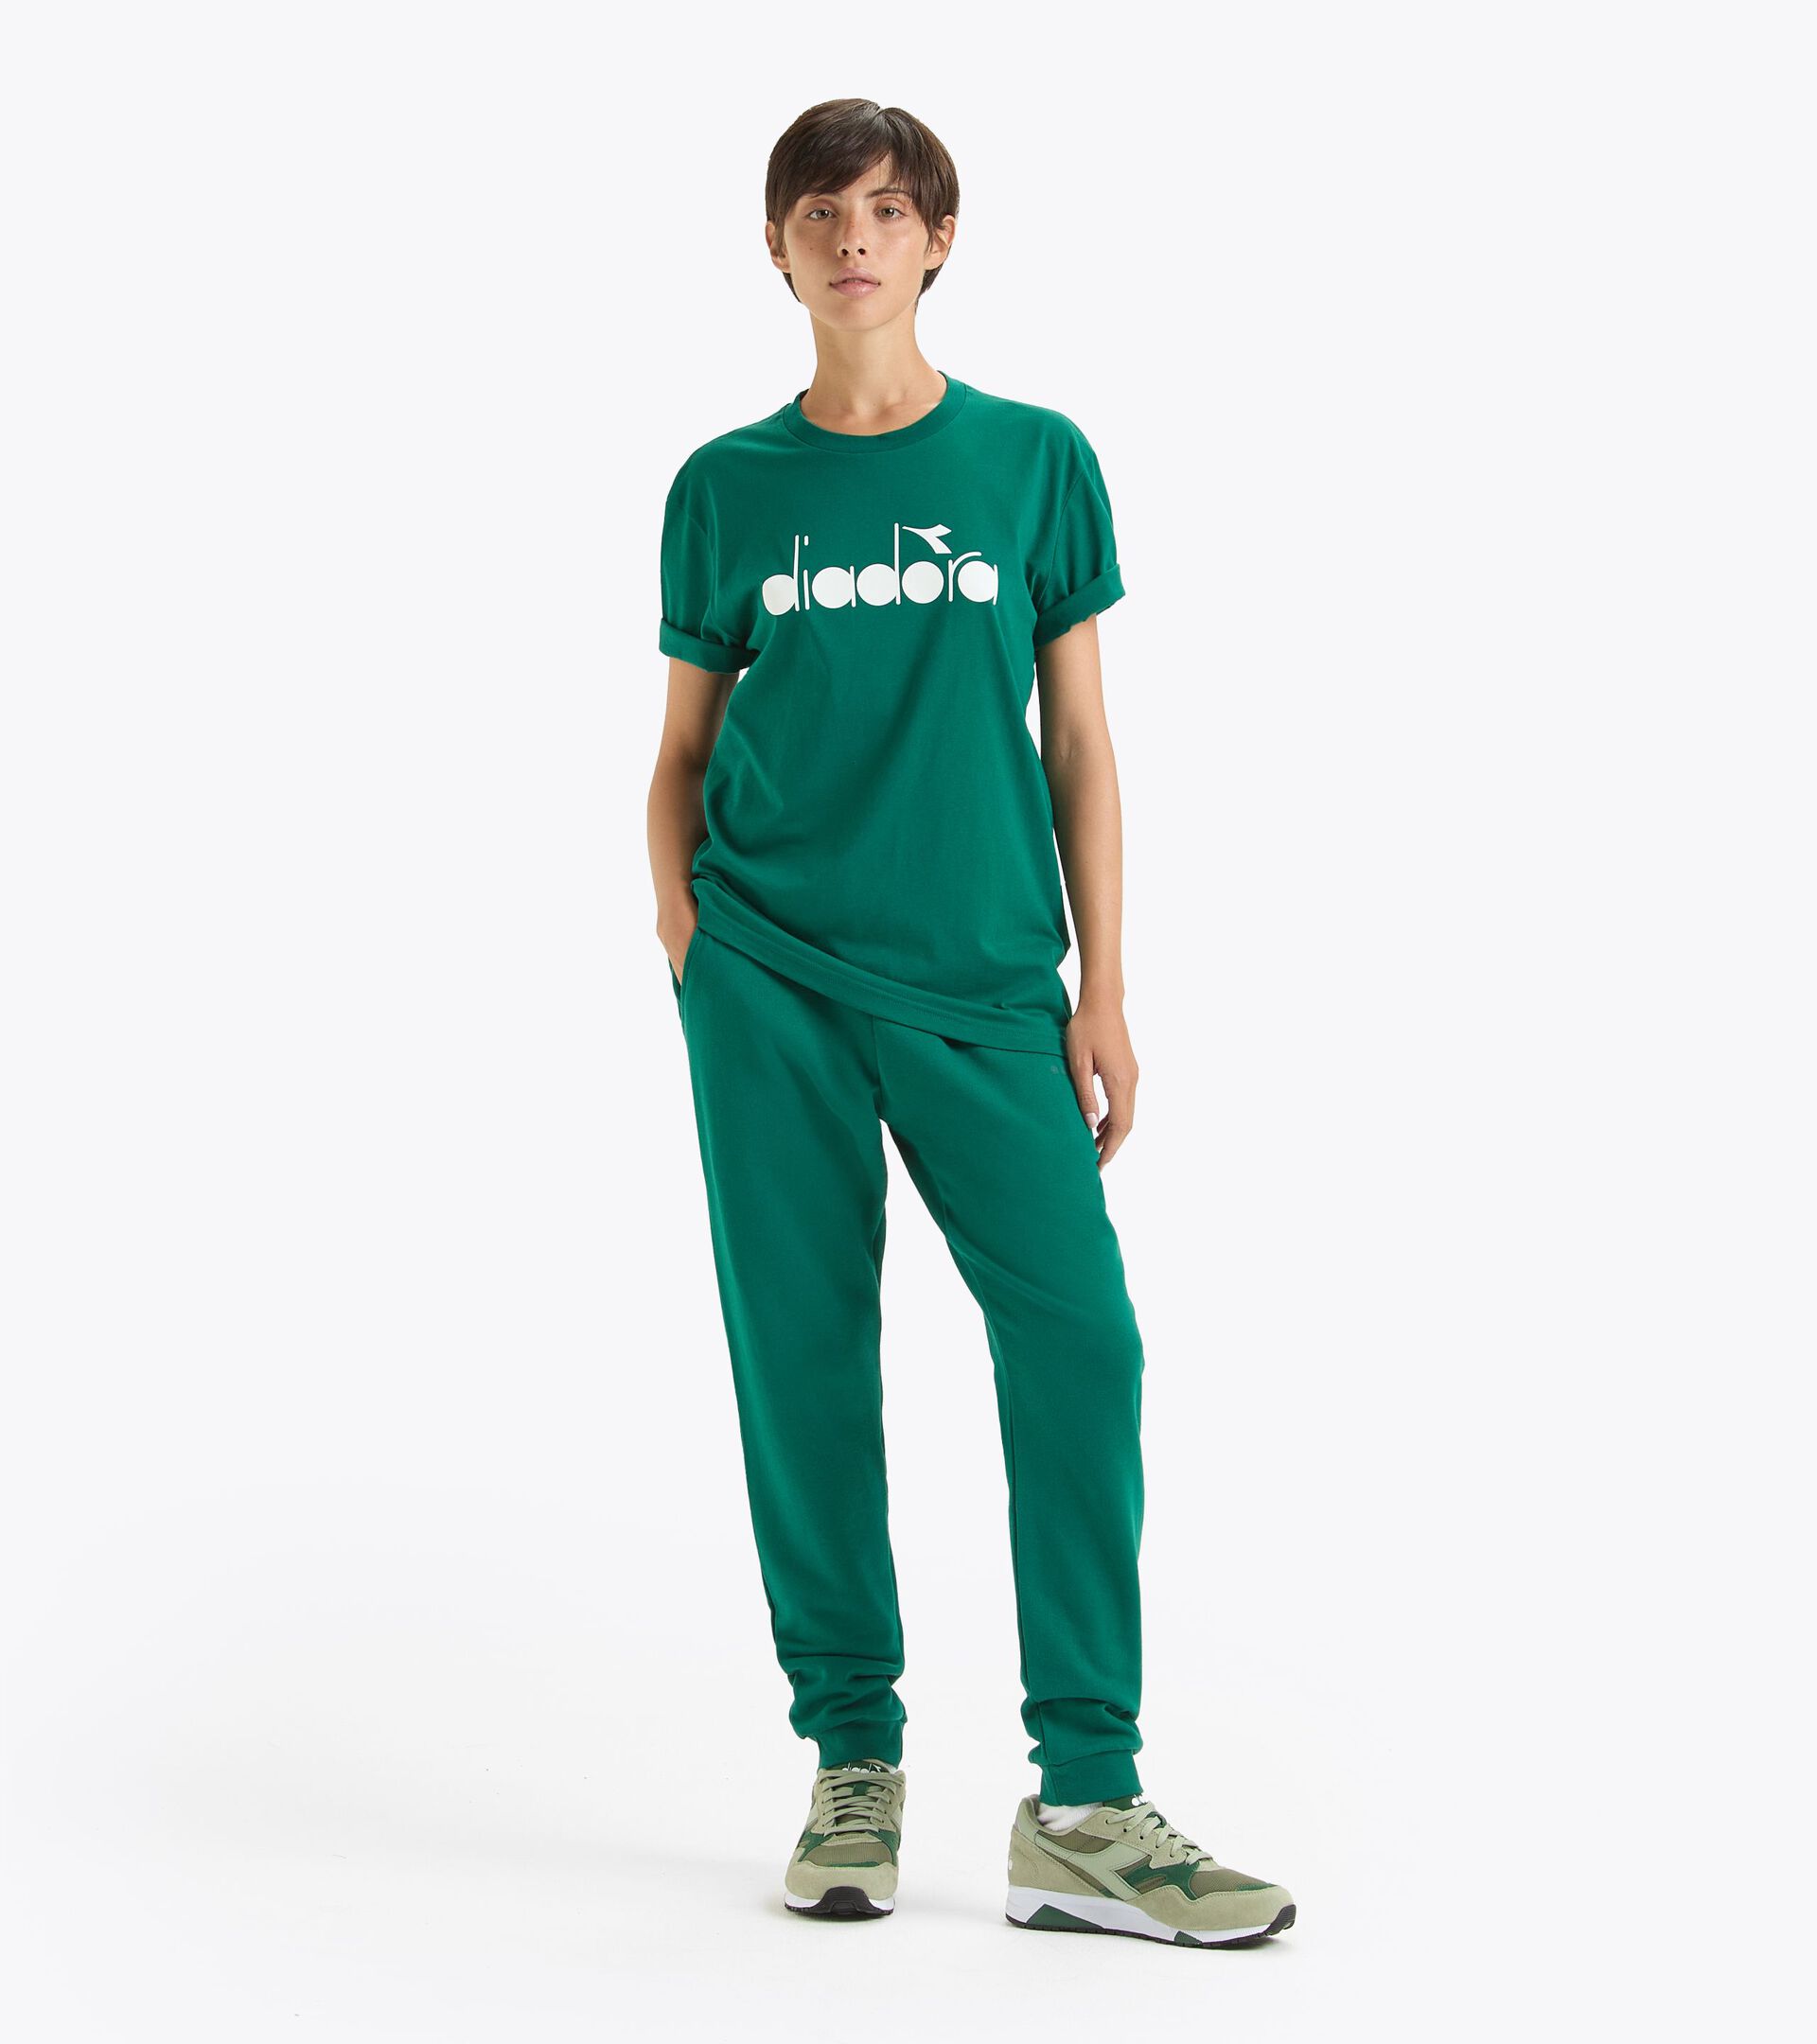 T-shirt - Made in Italy - Gender Neutral T-SHIRT SS LOGO AVENTURINE - Diadora